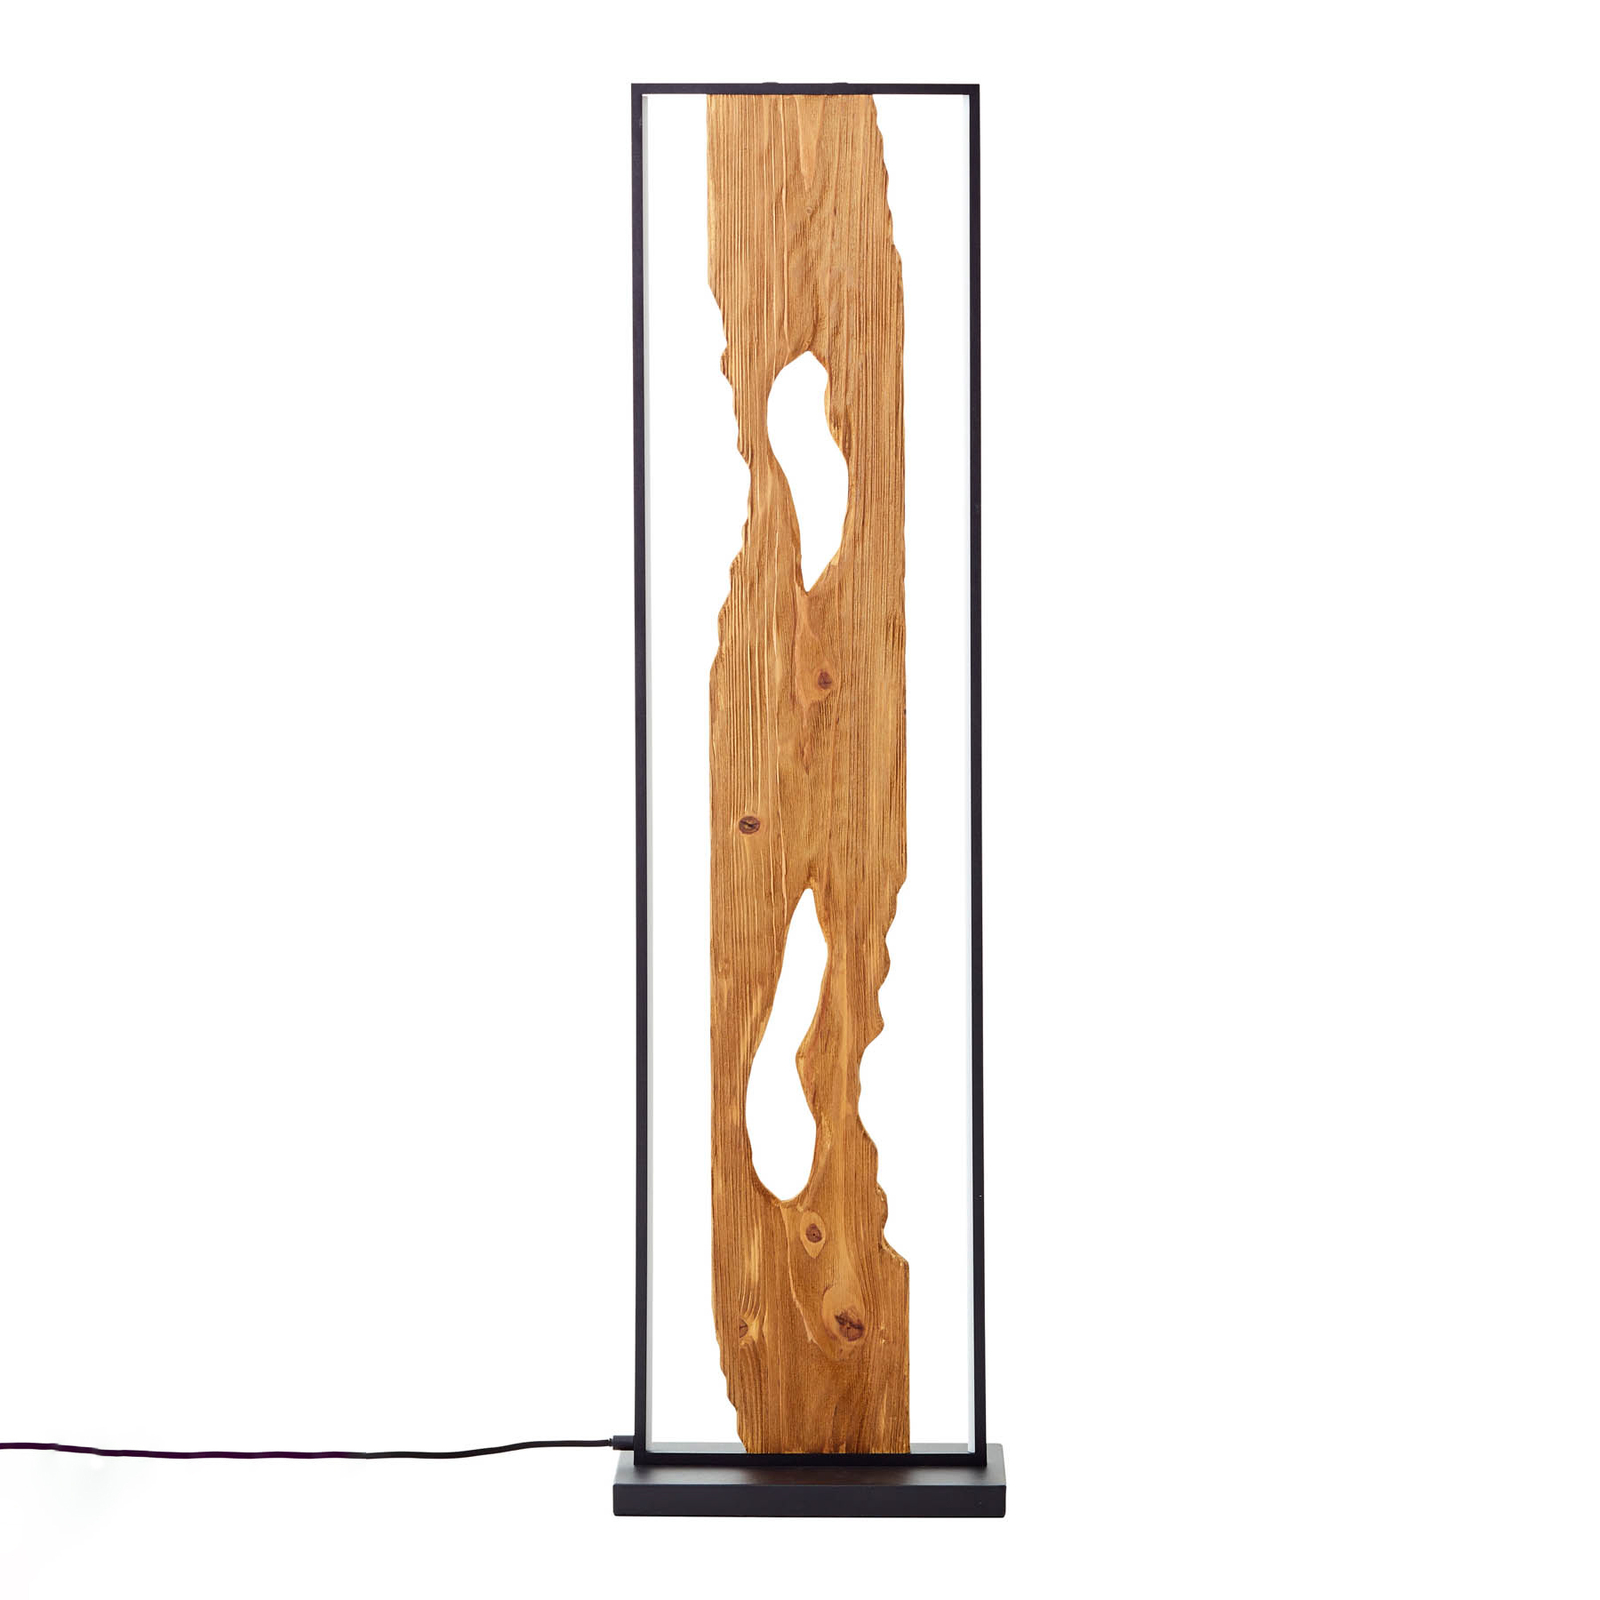 LED vloerlamp Chaumont van hout